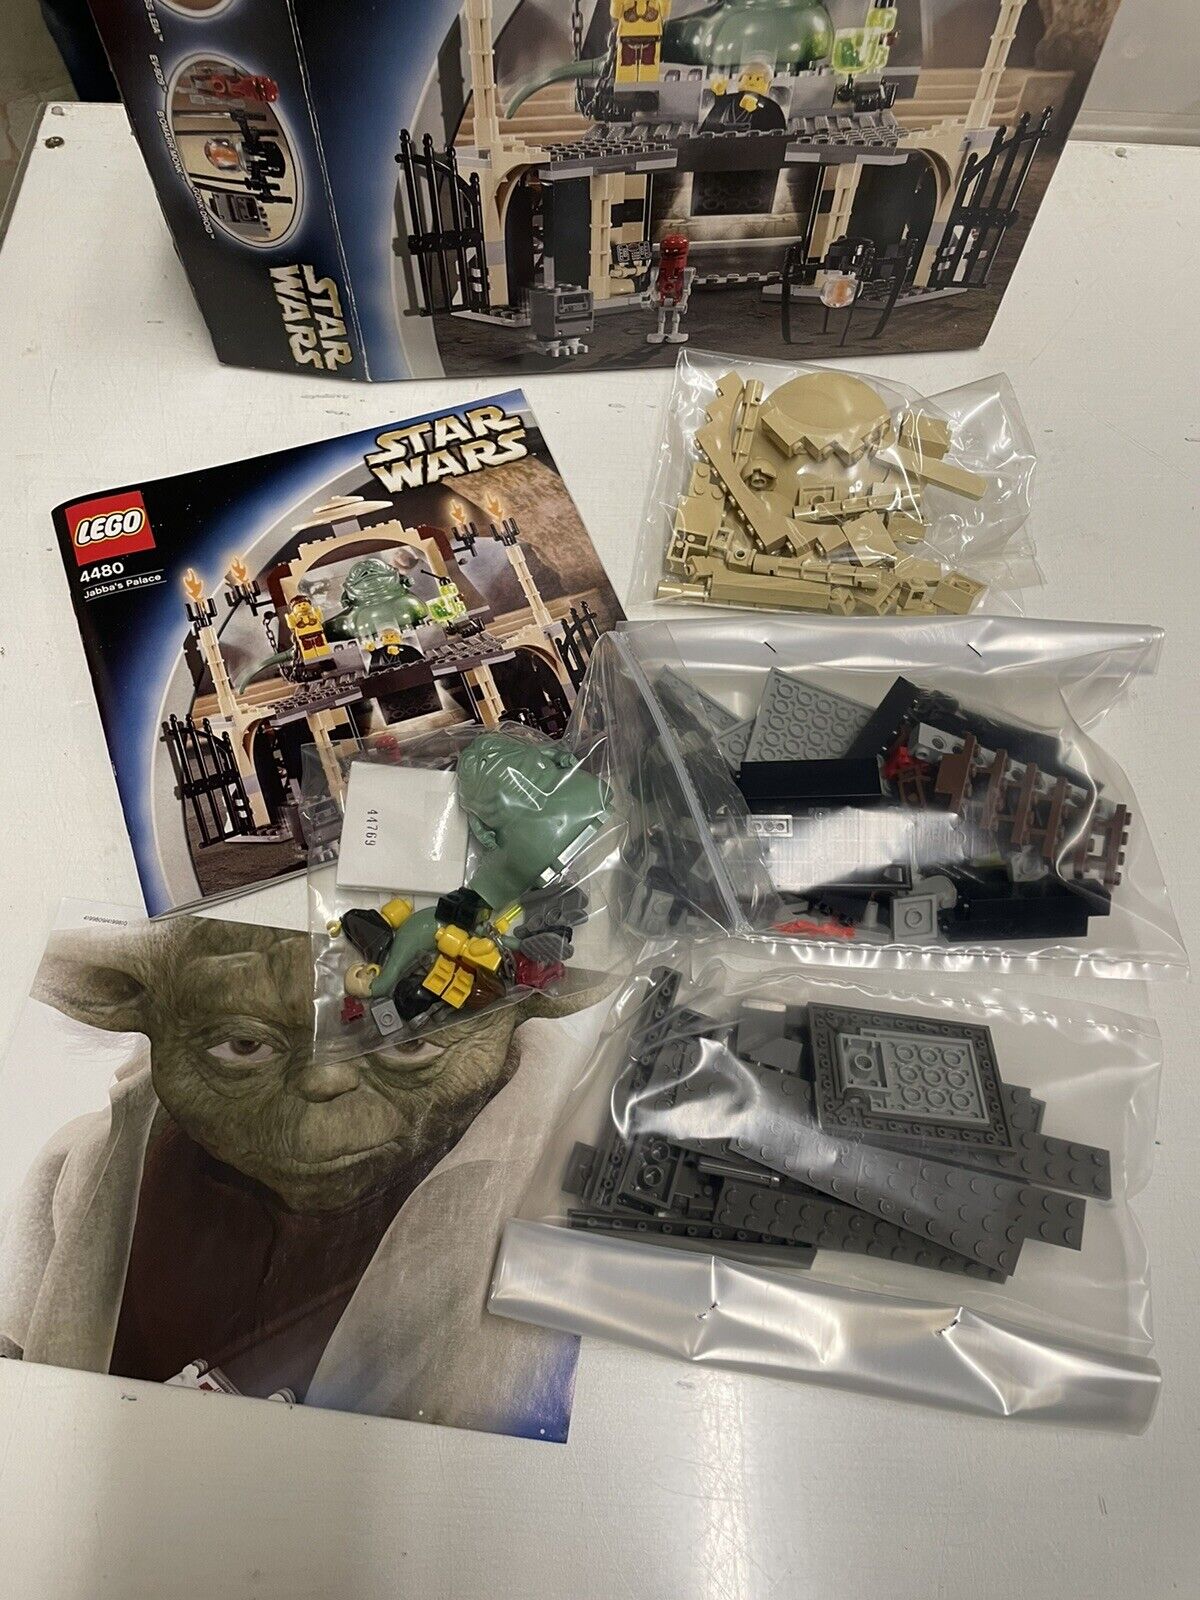 LEGO-4480-Star-Wars-Jabbas-Palace-con-scatola-in-ITALIA-144790325935-5